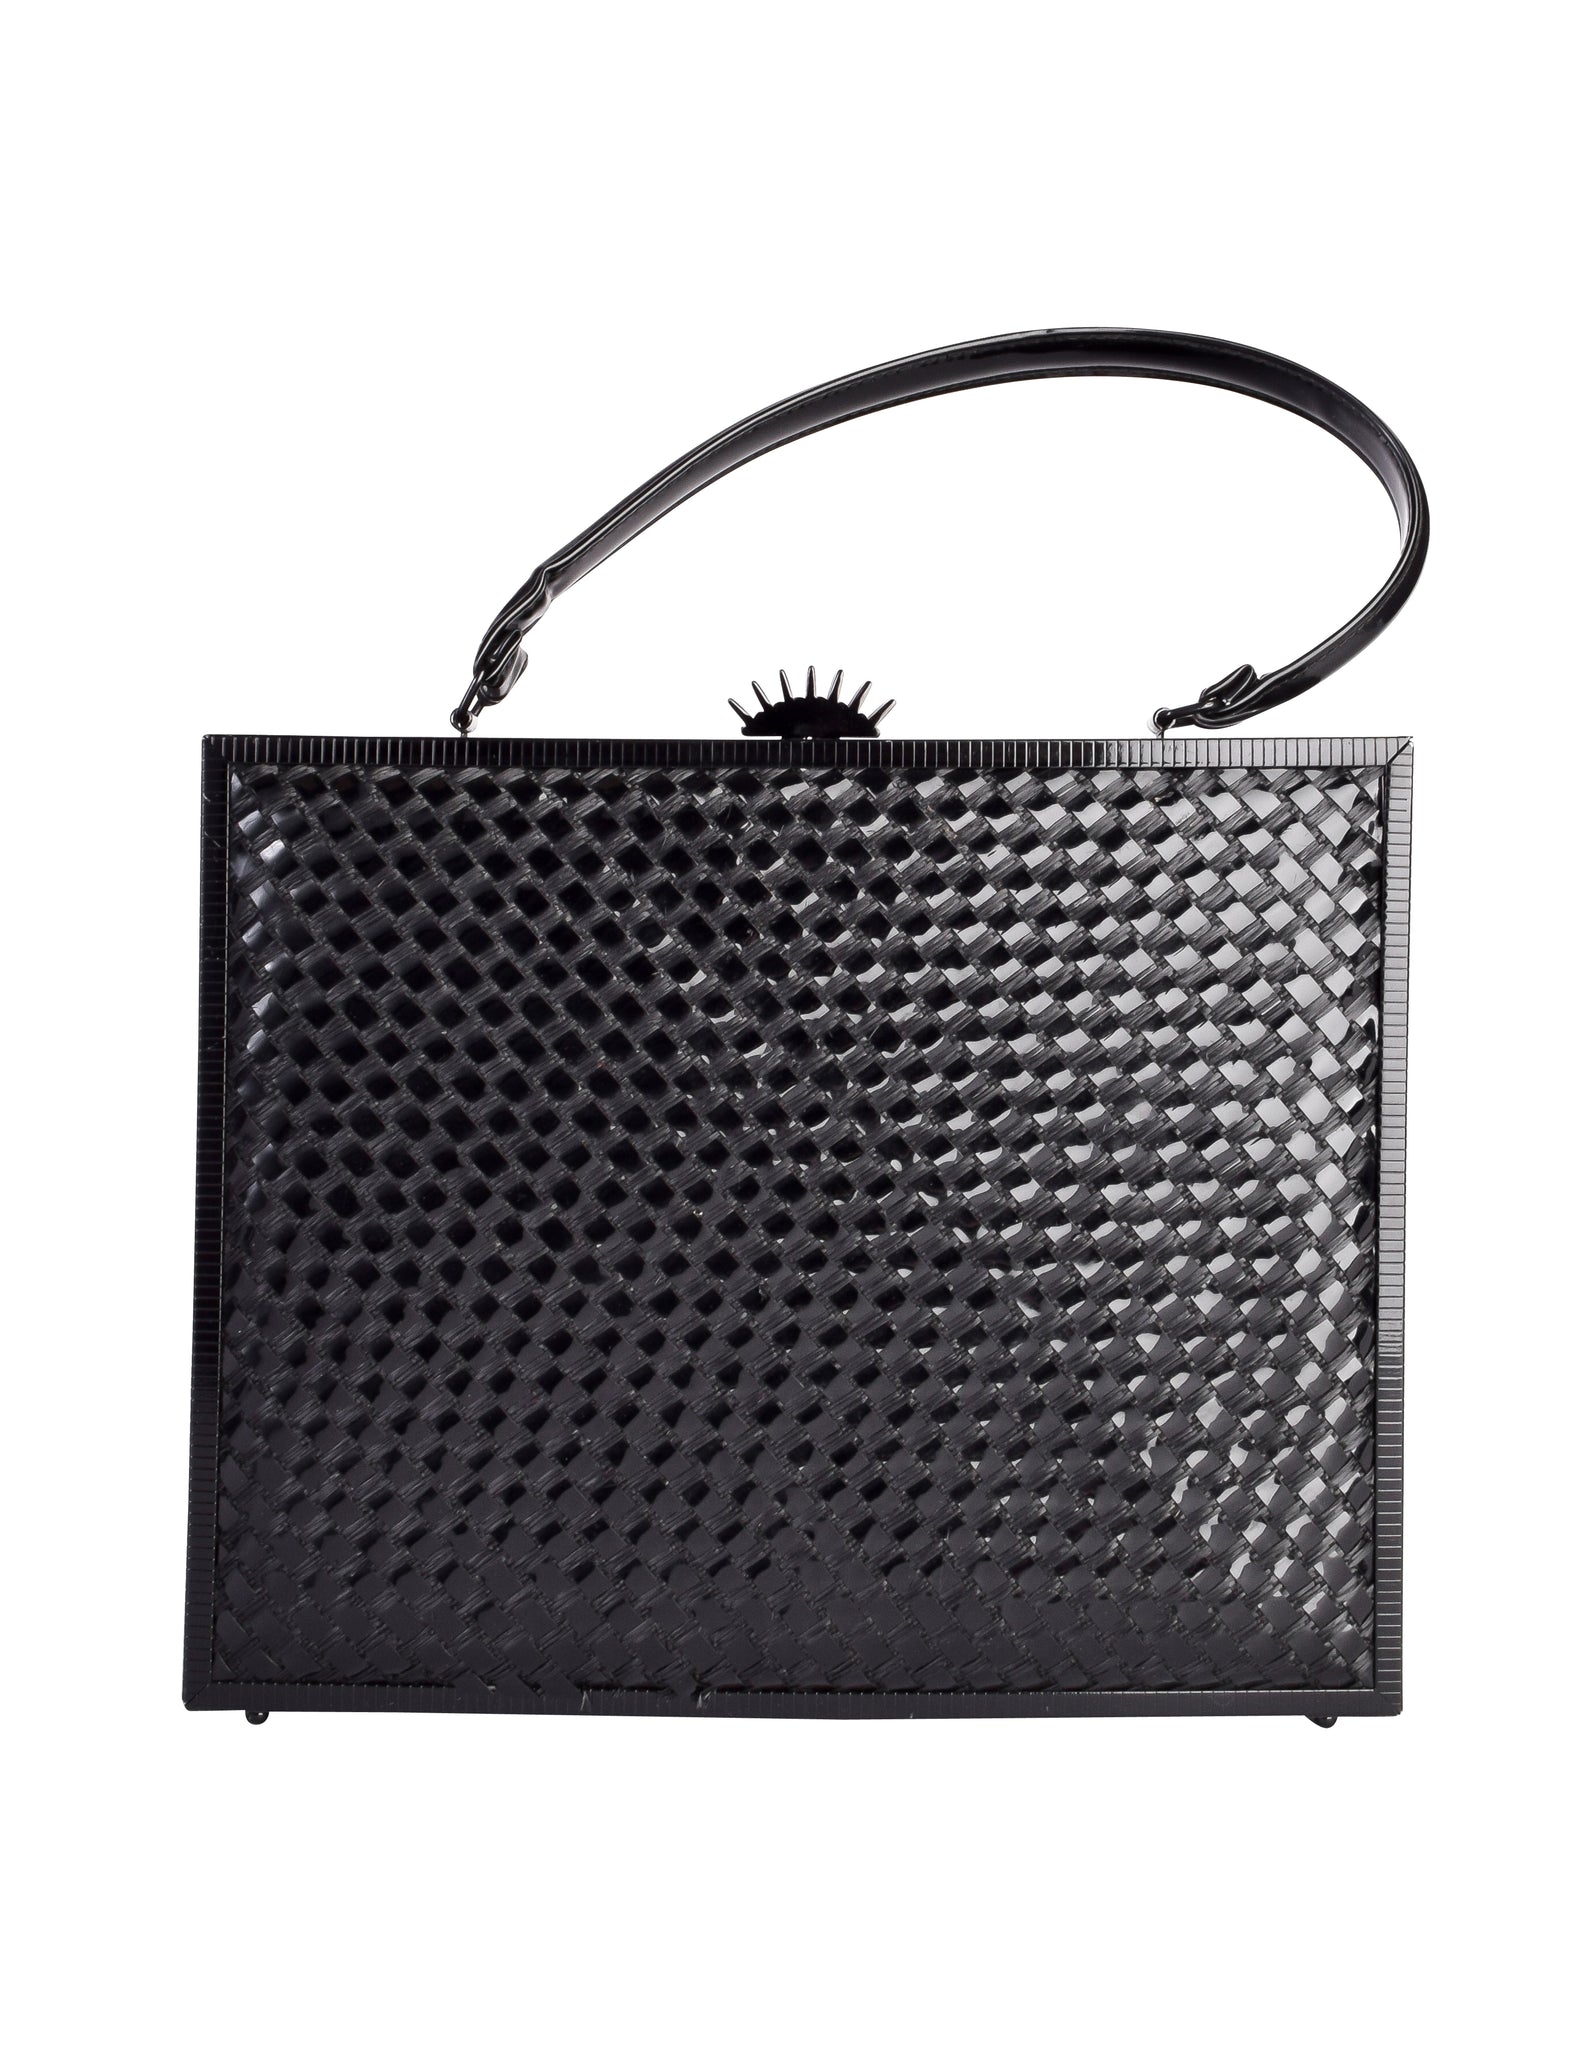 Lesco Lona Vintage 1960s Incredible Black Woven Patent Straw Metal Top Handle Bag